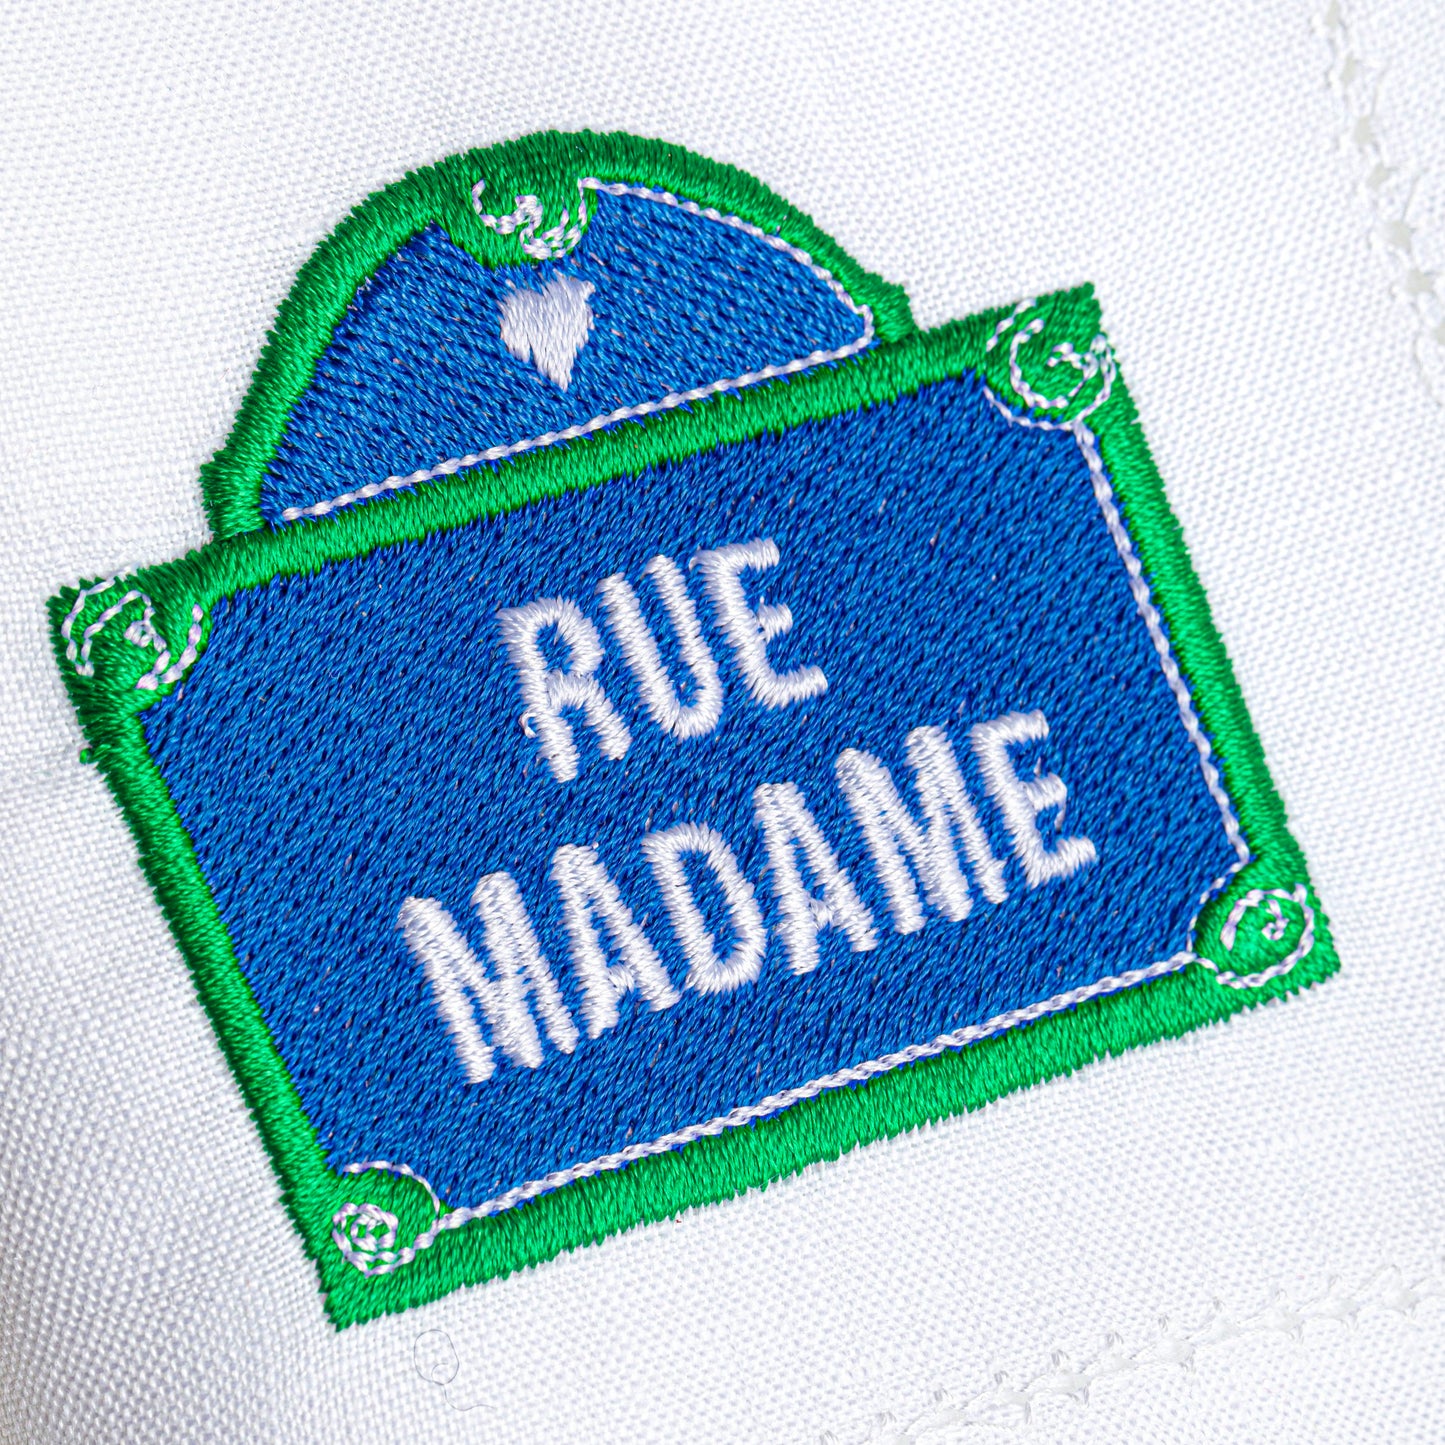 Embroidered linen napkin | MADAME STREET